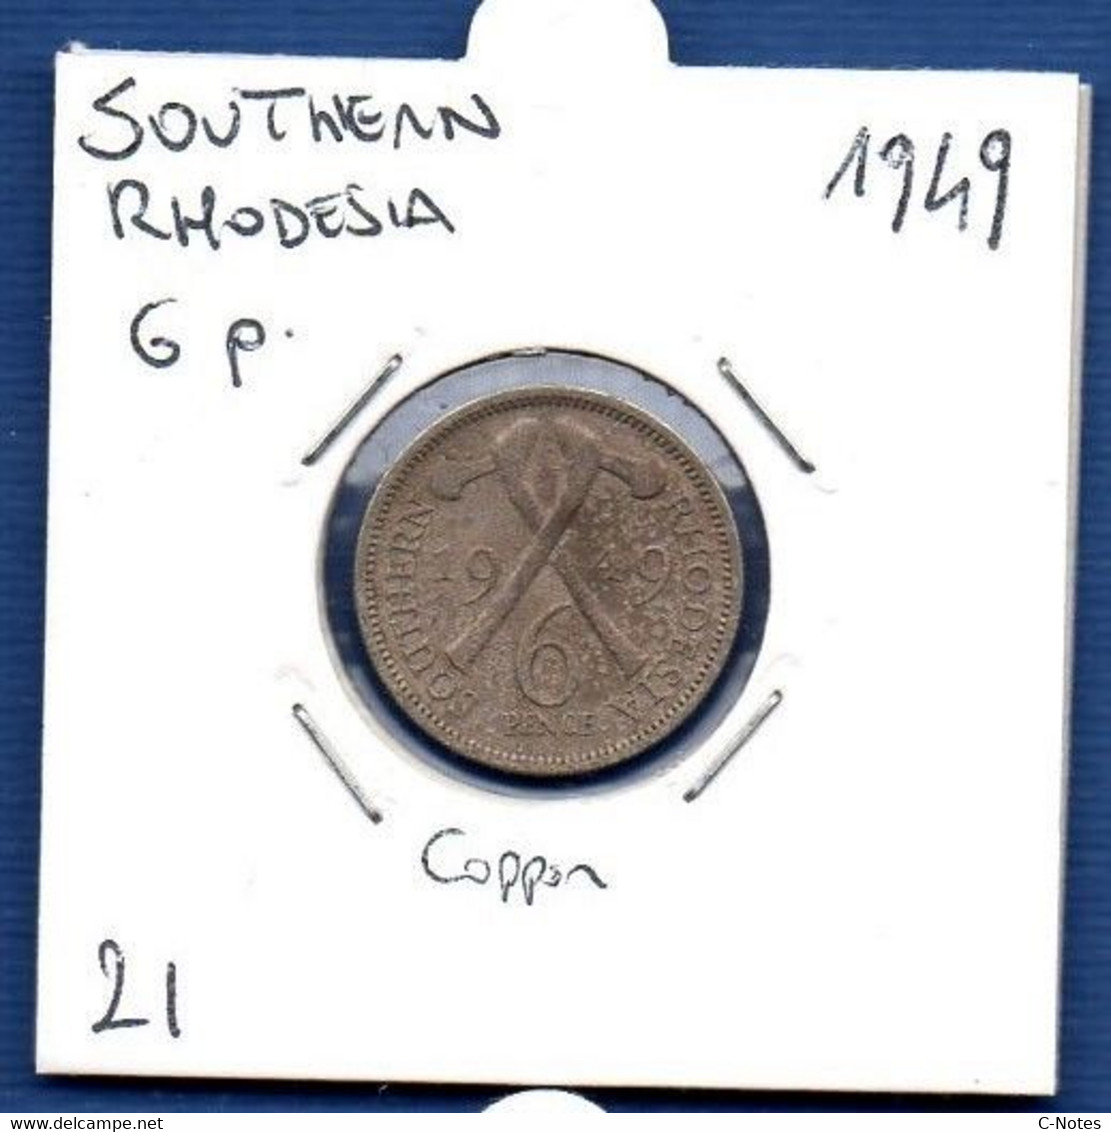 SOUTHERN RHODESIA - 6 Pence 1949  -  See Photos - Km 21 - Rhodesia